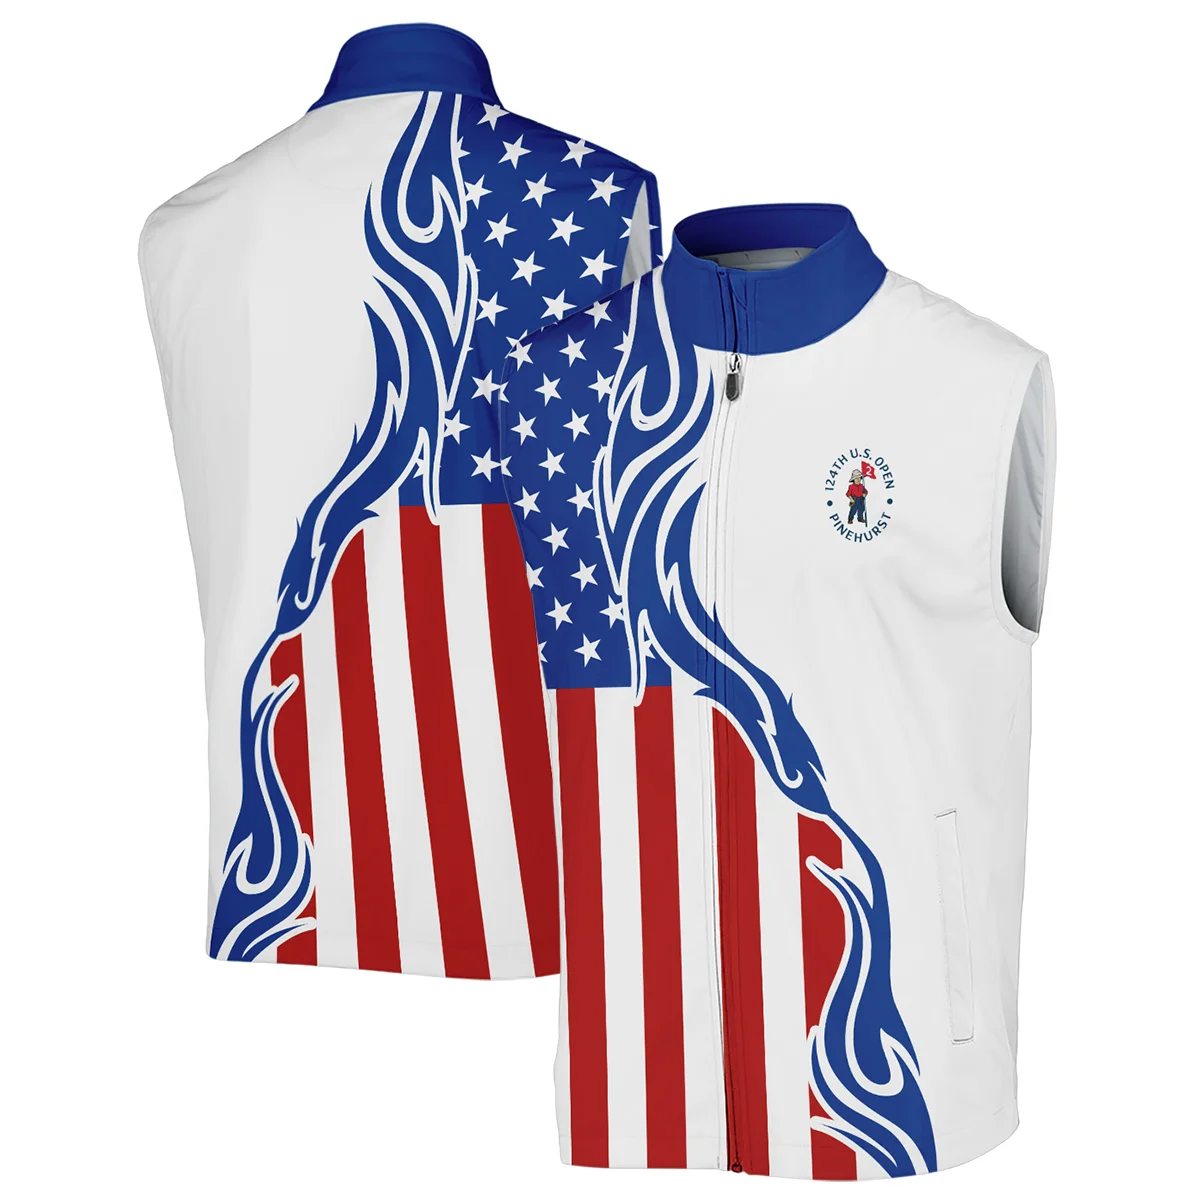 Golf Sport Titleist 124th U.S. Open Pinehurst Quarter-Zip Jacket USA Flag Pattern Blue White All Over Print Quarter-Zip Jacket